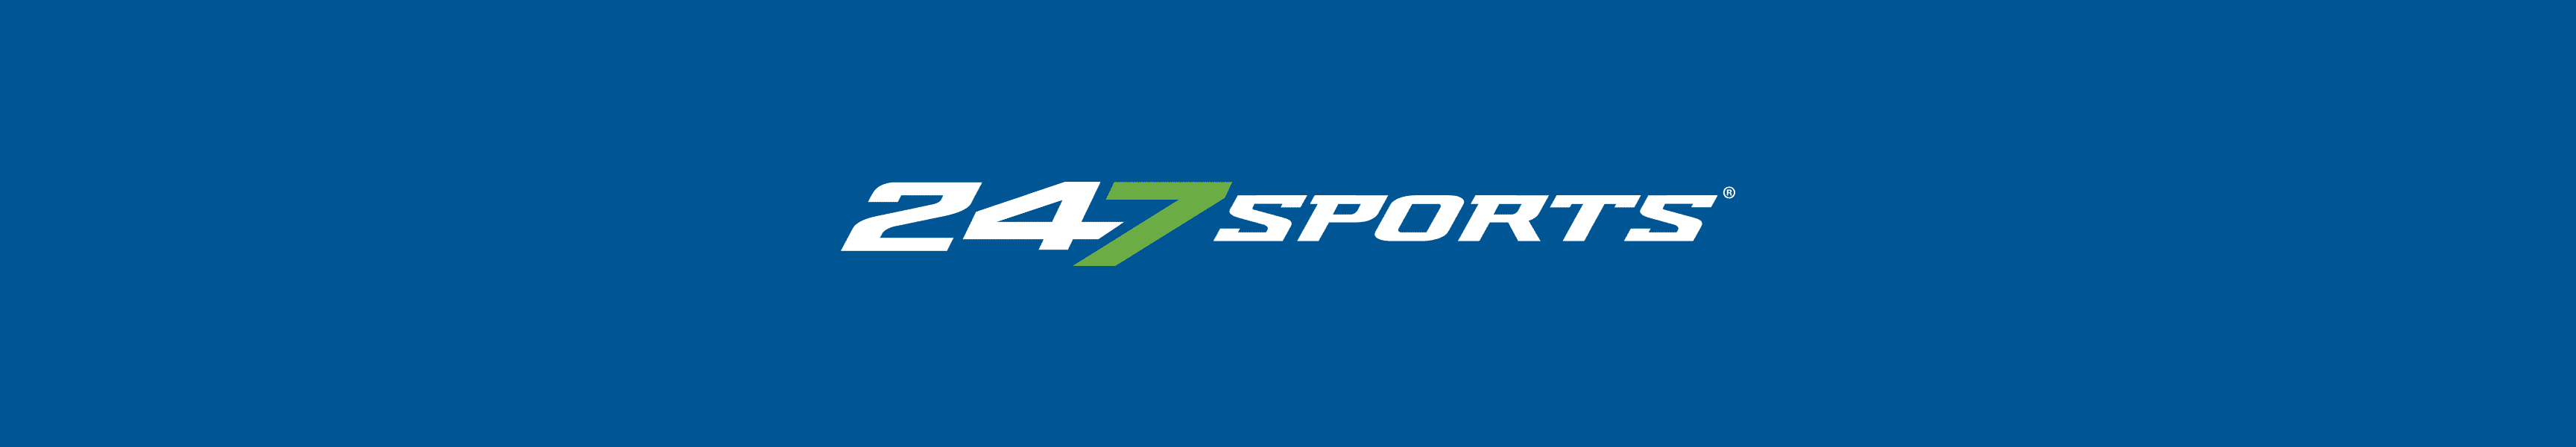 247 Sport